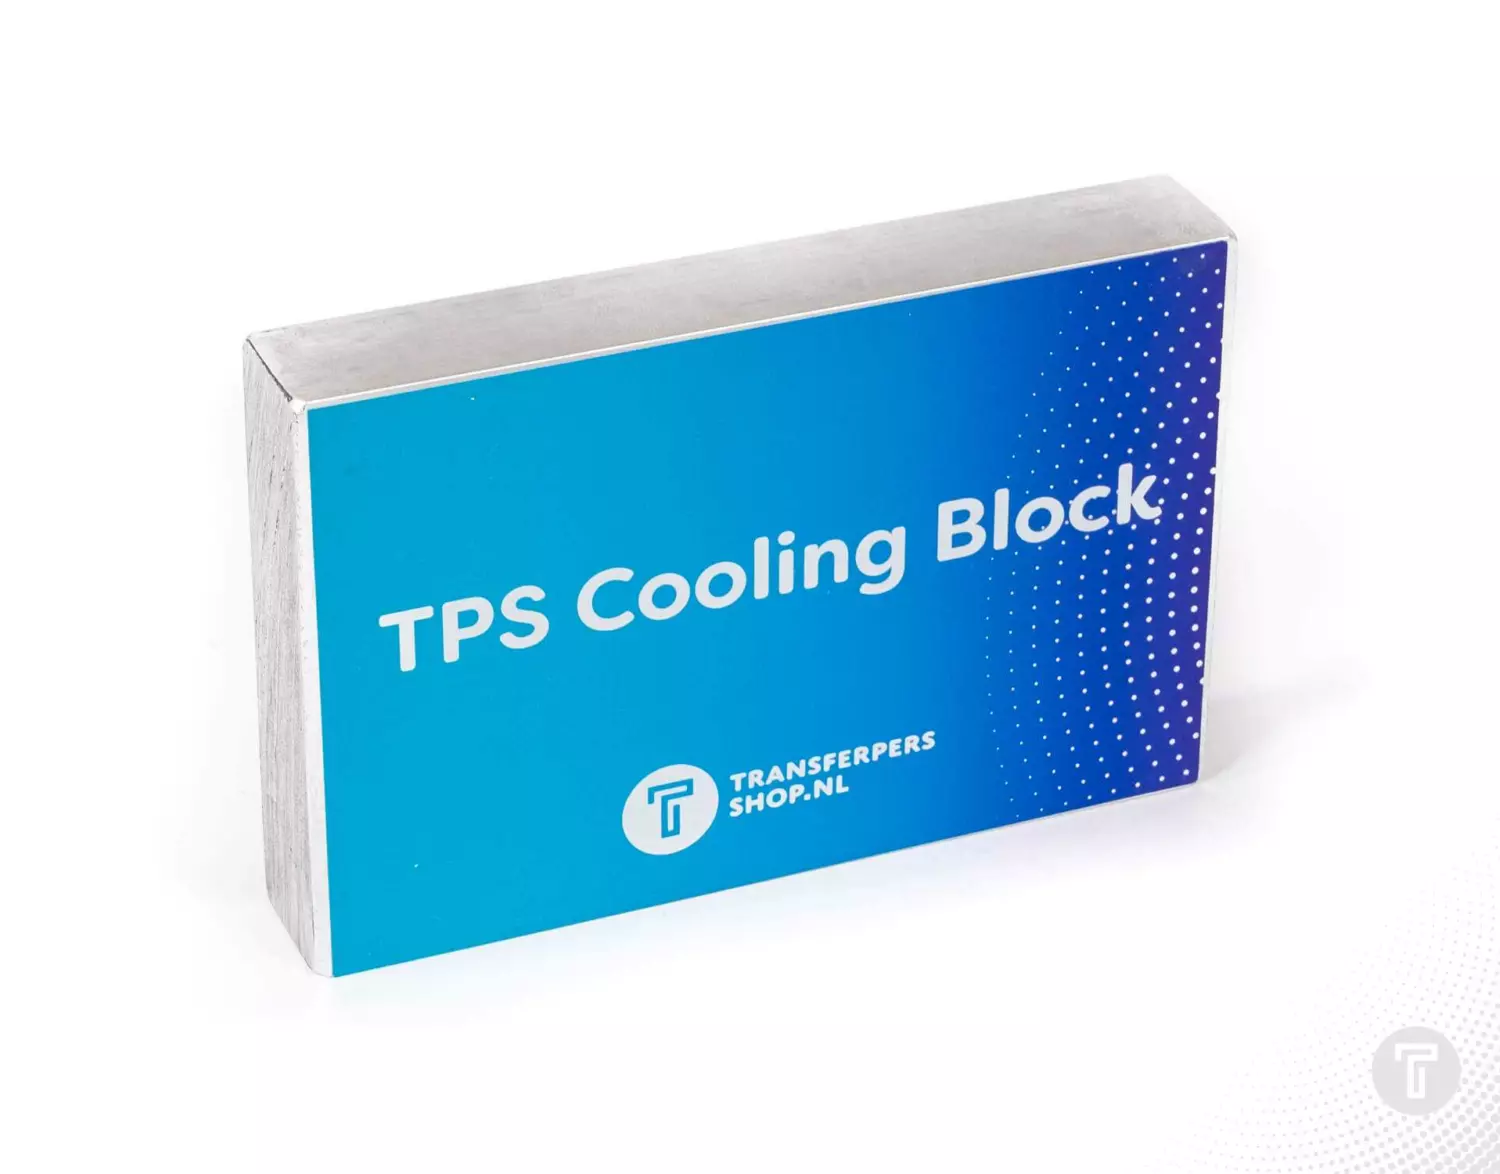 Tps cooling block